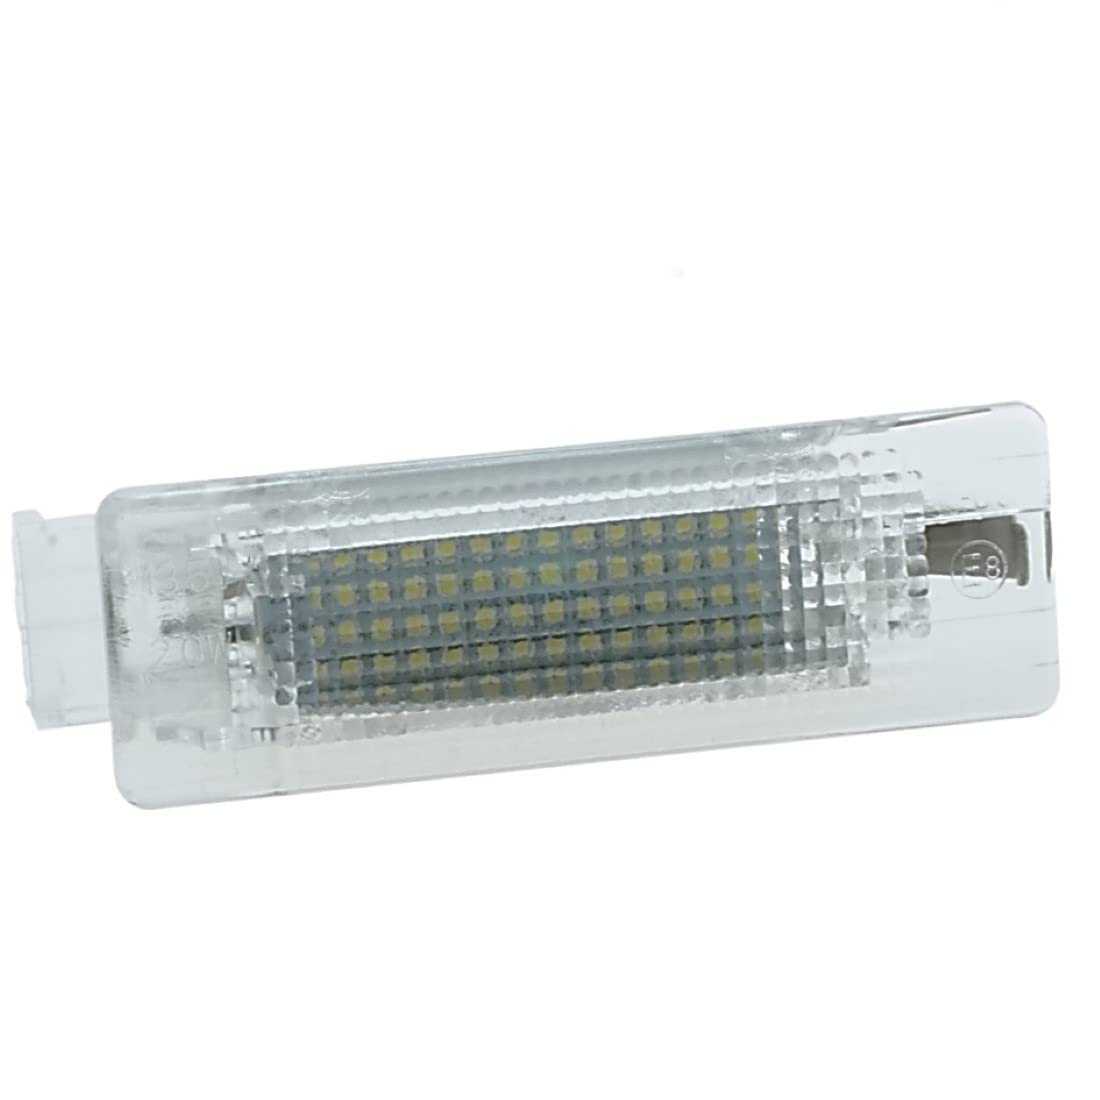 Do!LED 1x D06 SMD LED Kofferraum Kofferraumleuchte Beleuchtung Xenon Optik von Do!LED